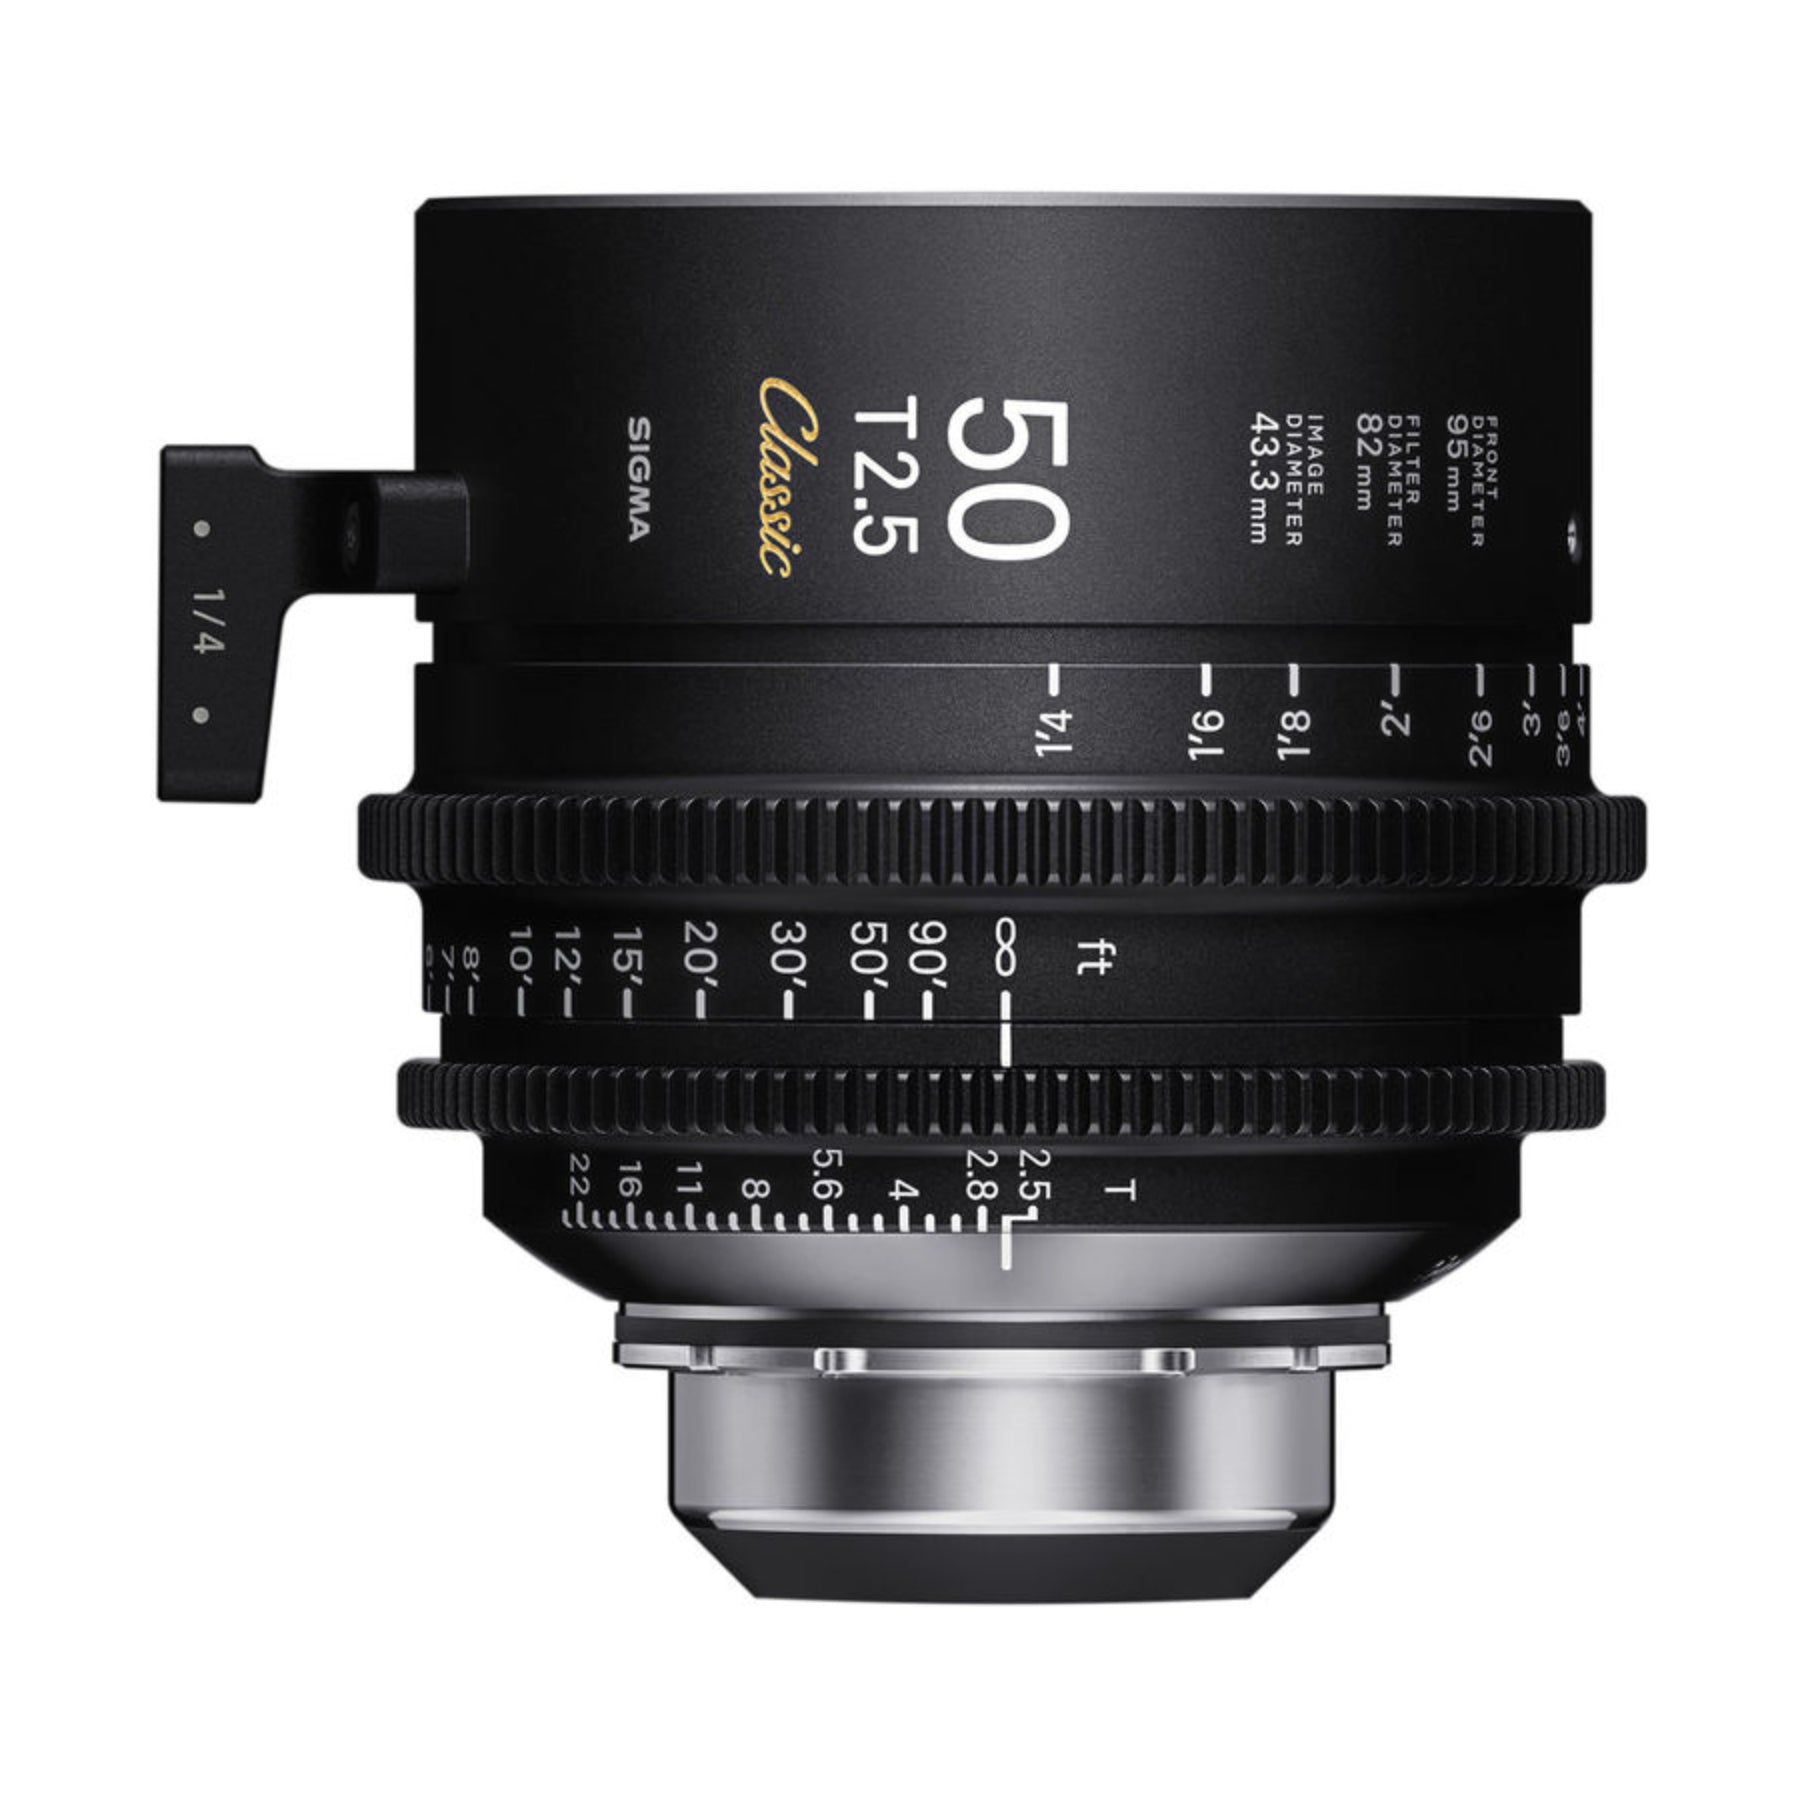 Sigma Classics PL mount 10 lens kit for hire